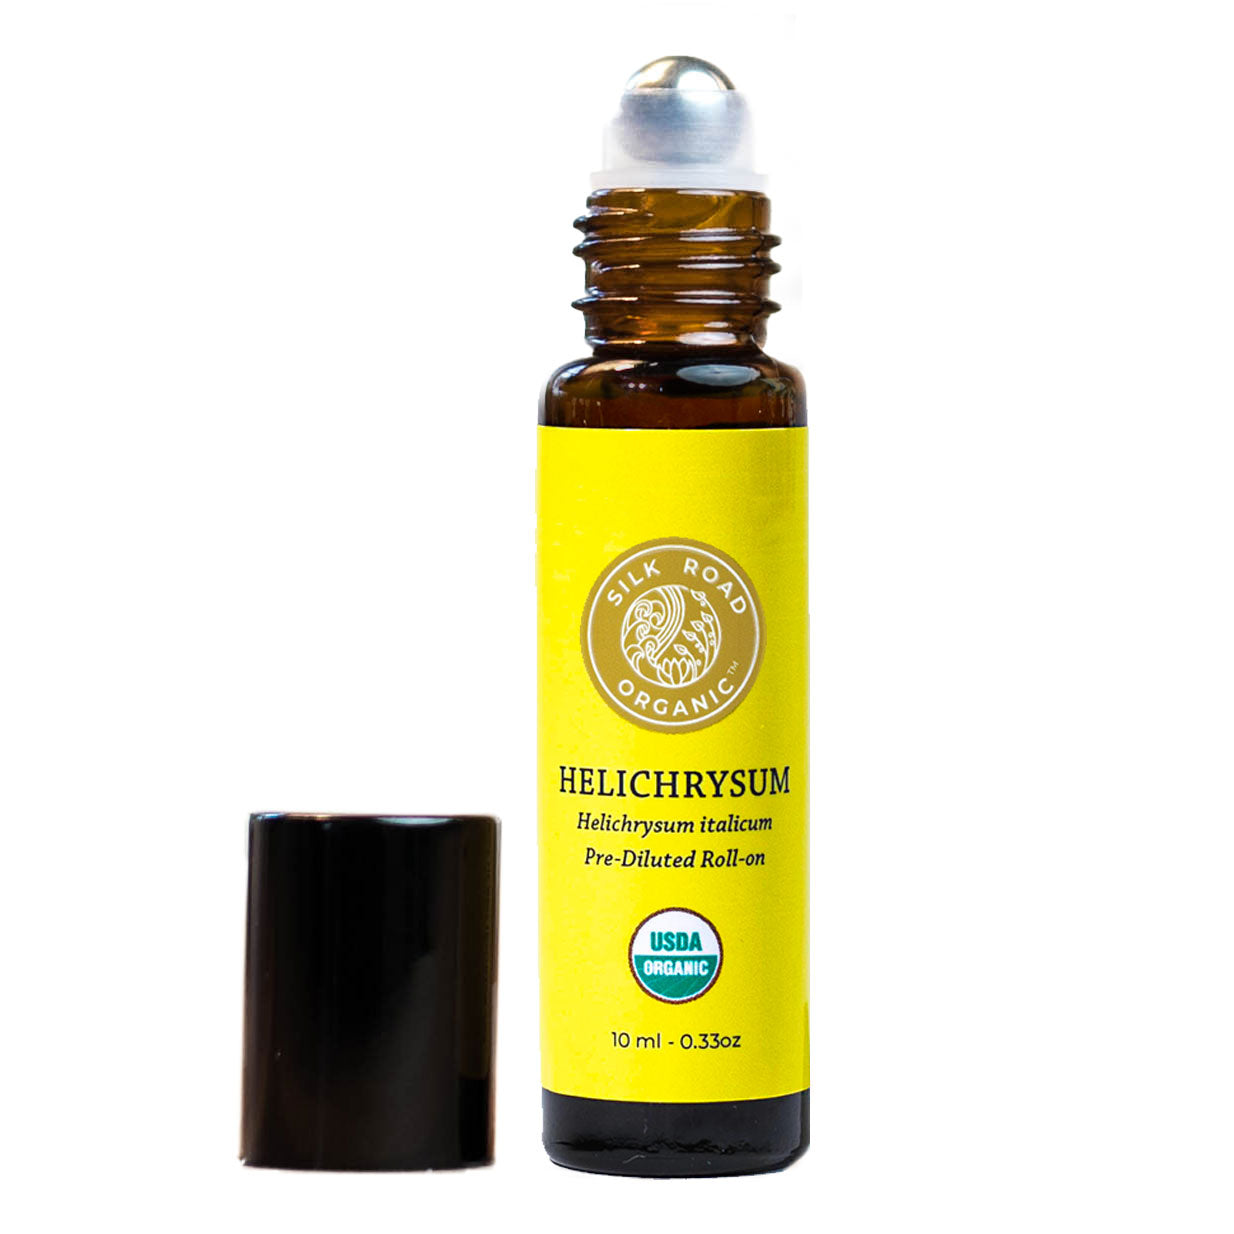 Helichrysum - Vitality Extracts